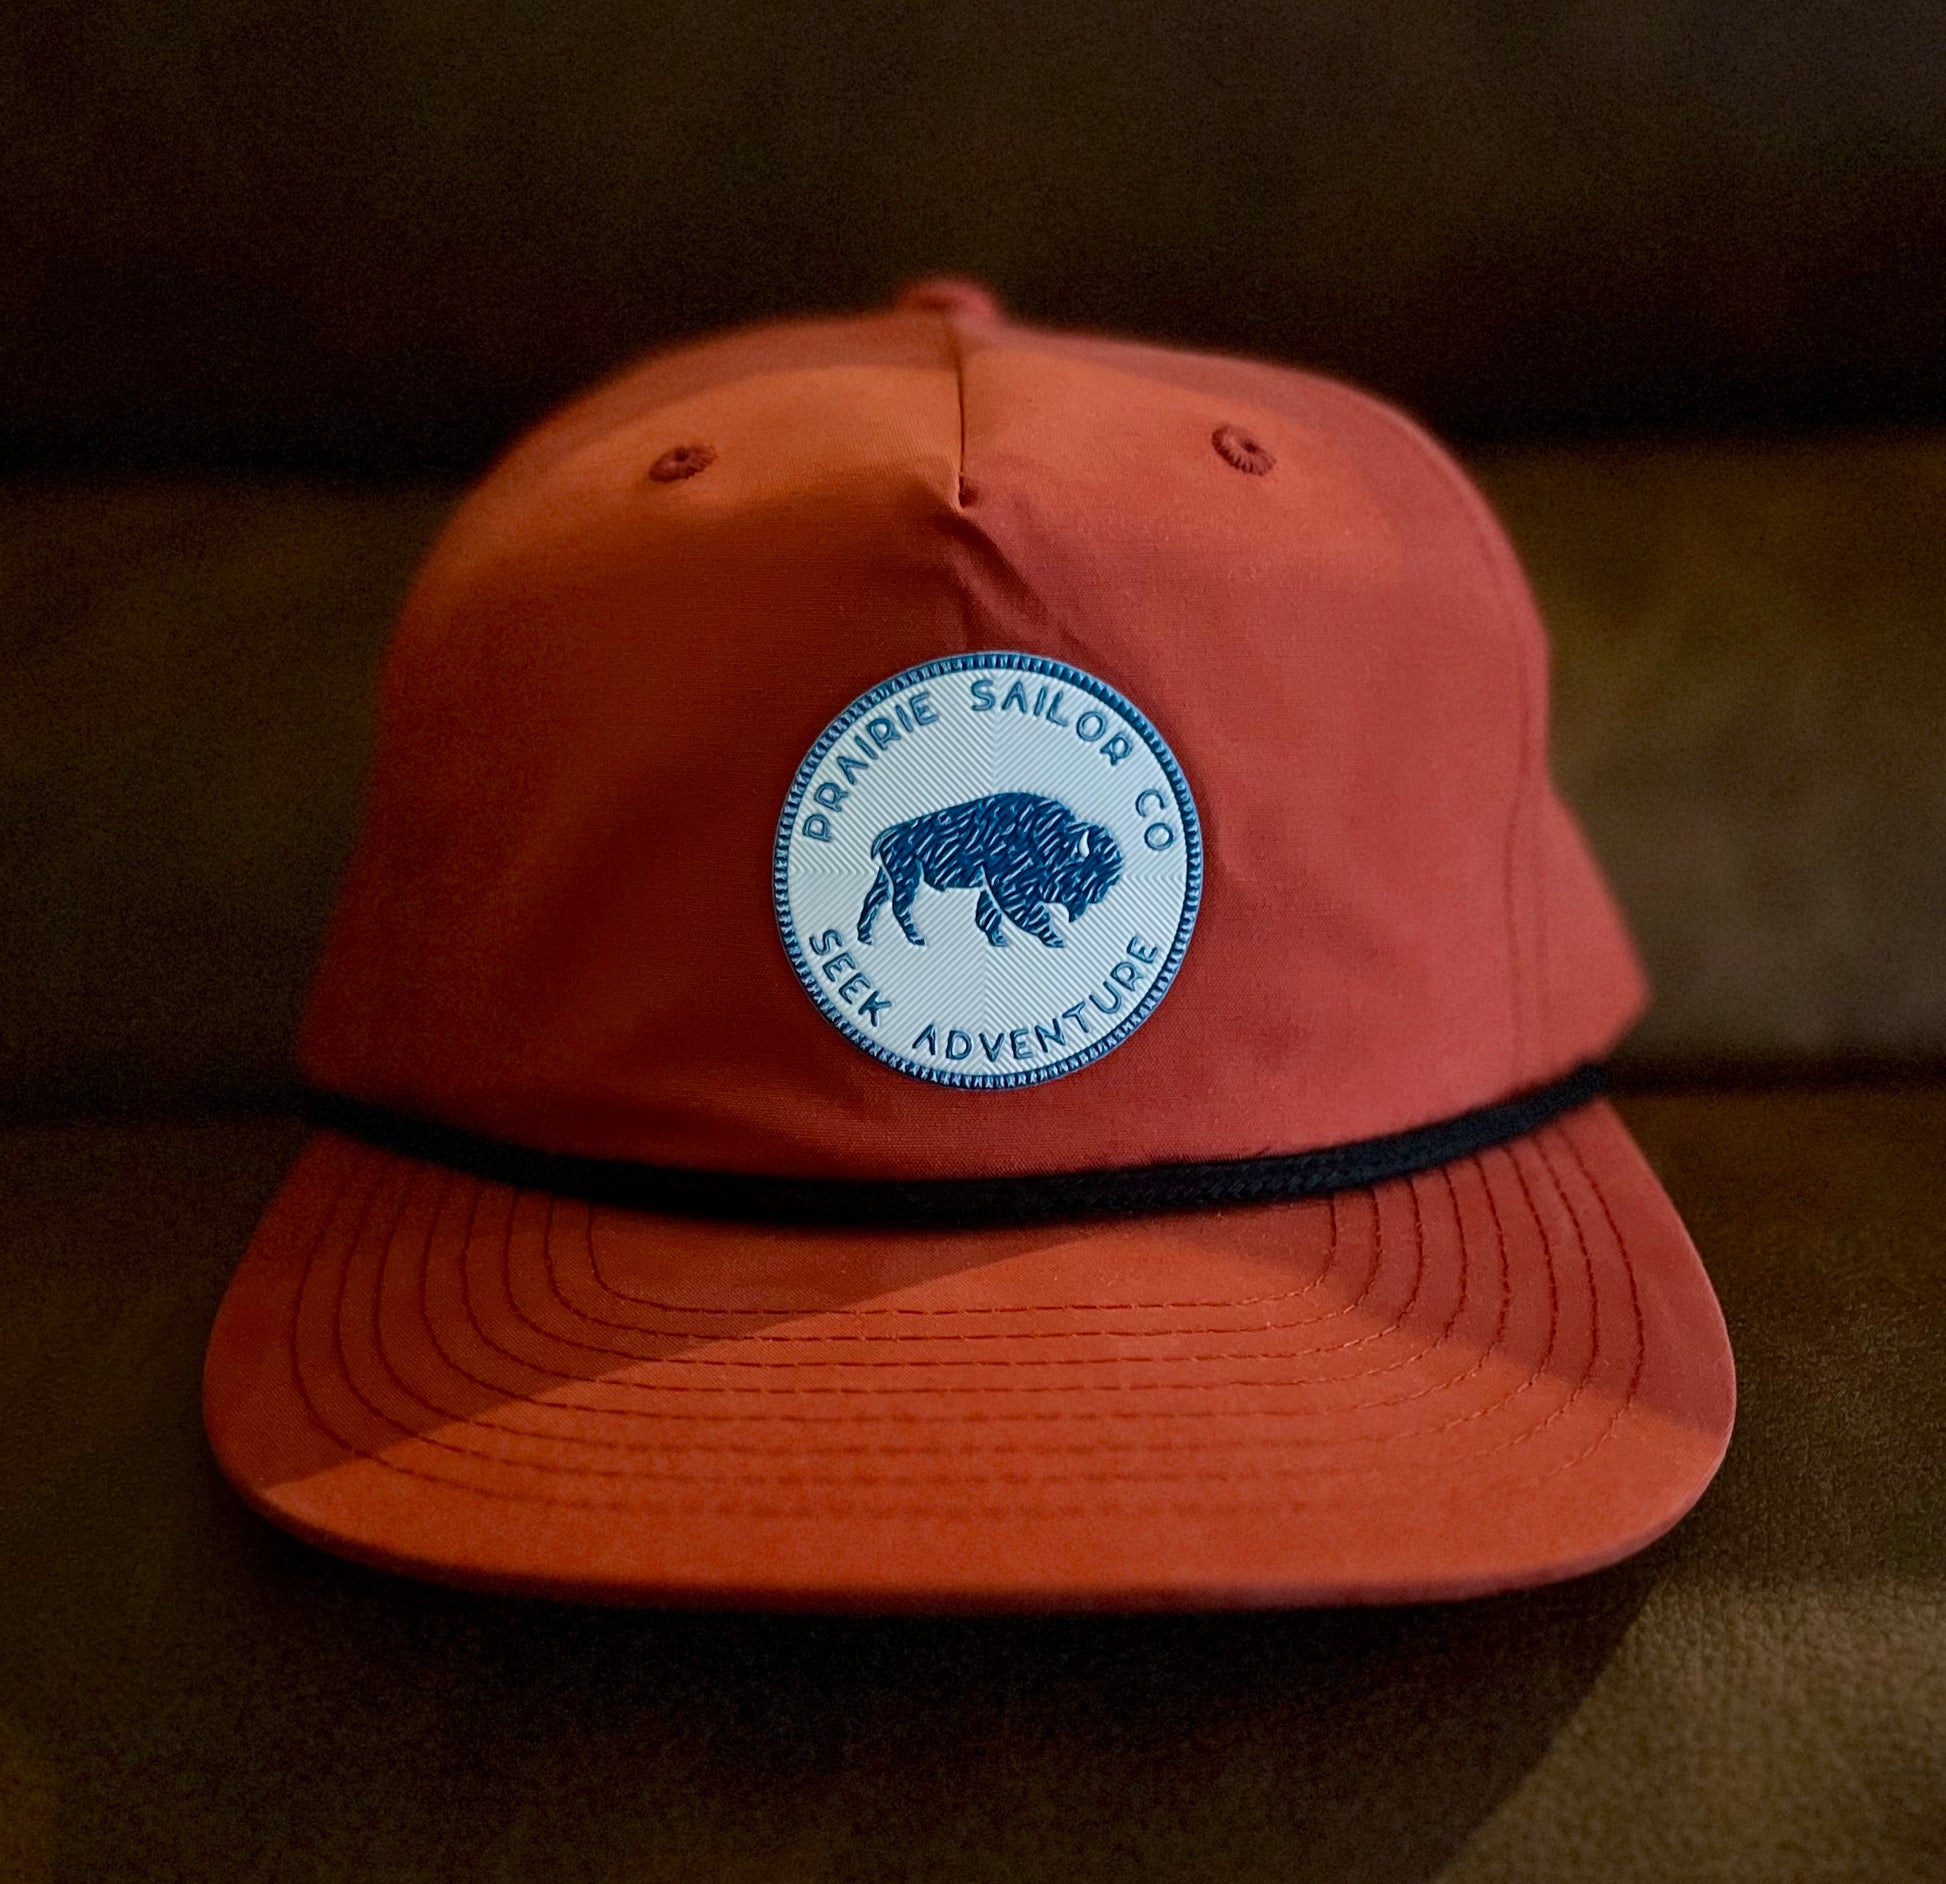 Trucker Hats for Men | Happy Hat | Prairie Sailor Cardinal